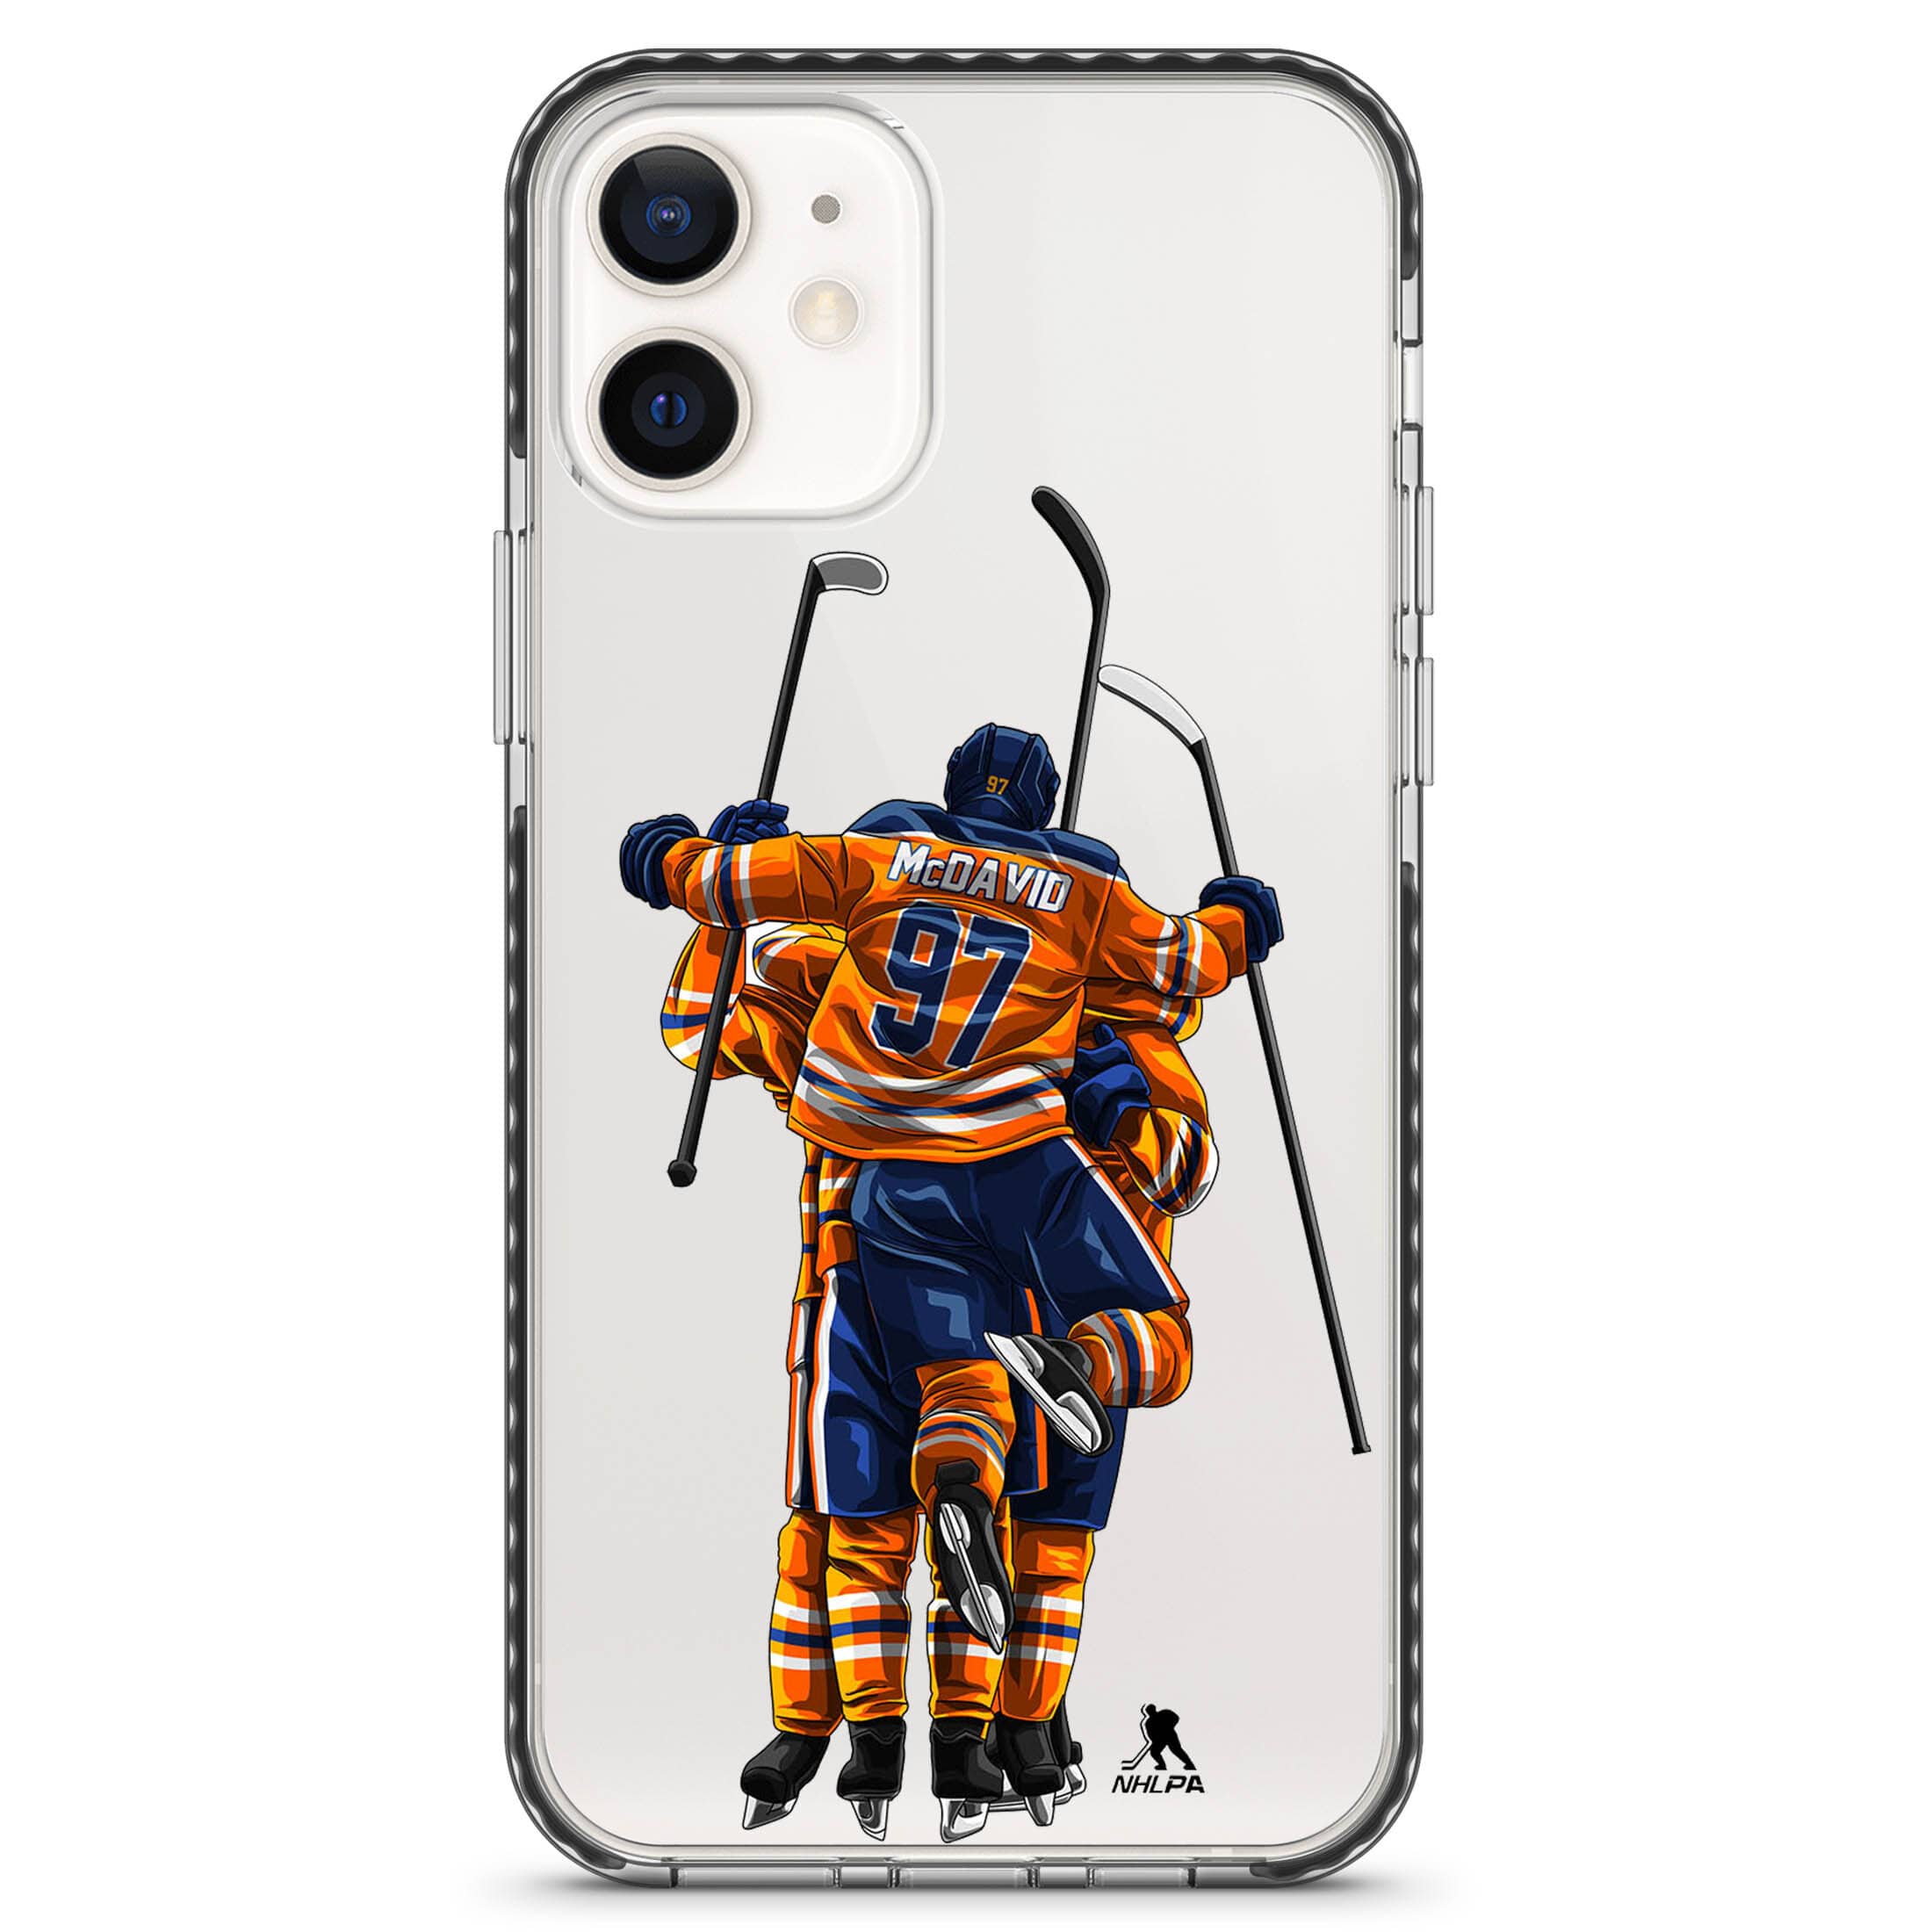 hockey iphone covers